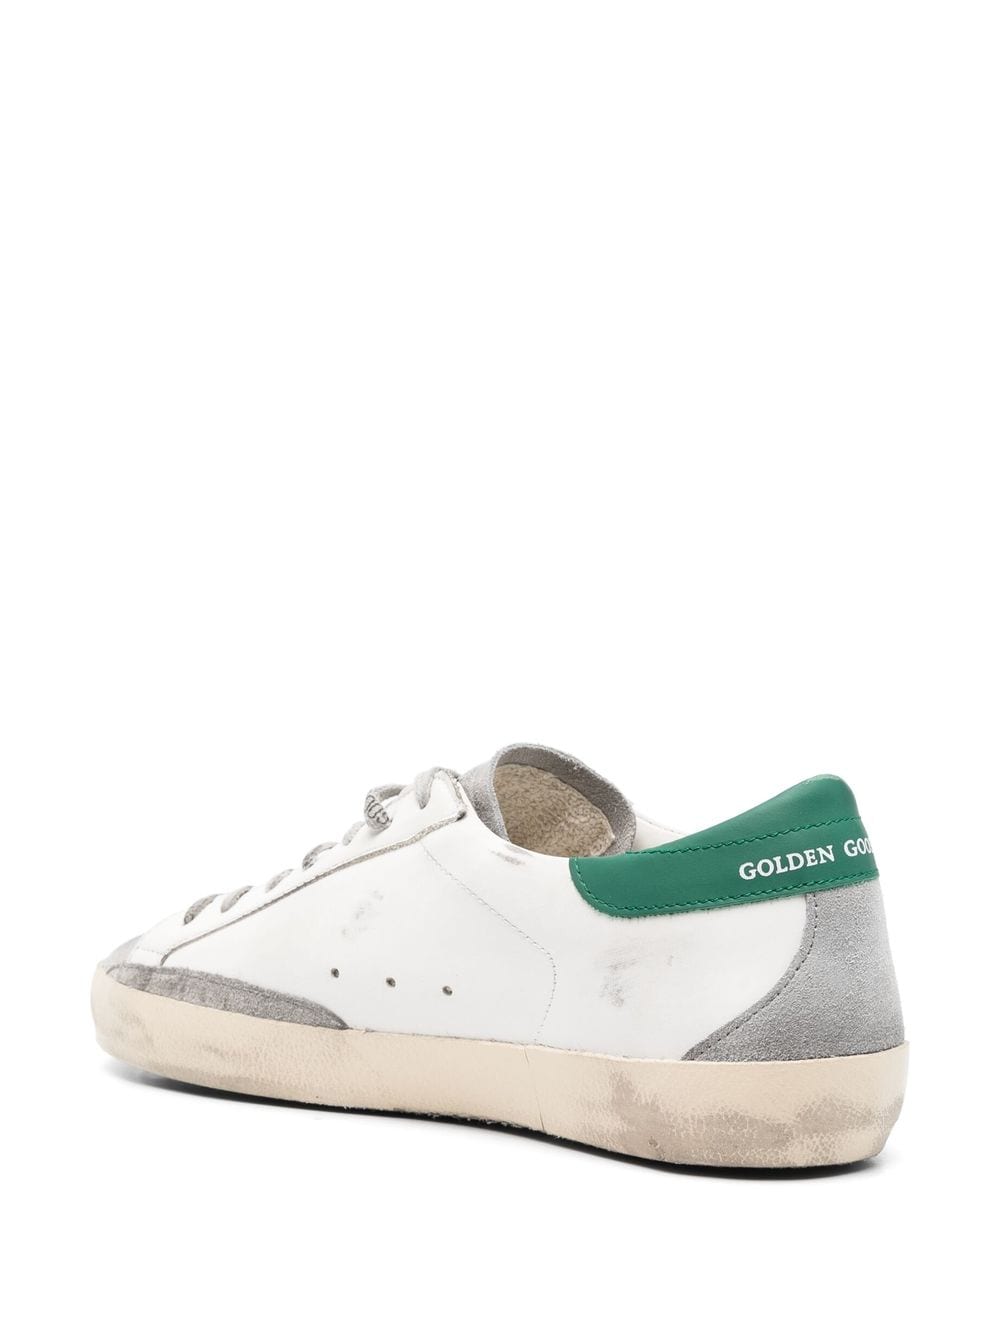 superstar sneaker with green heel tab